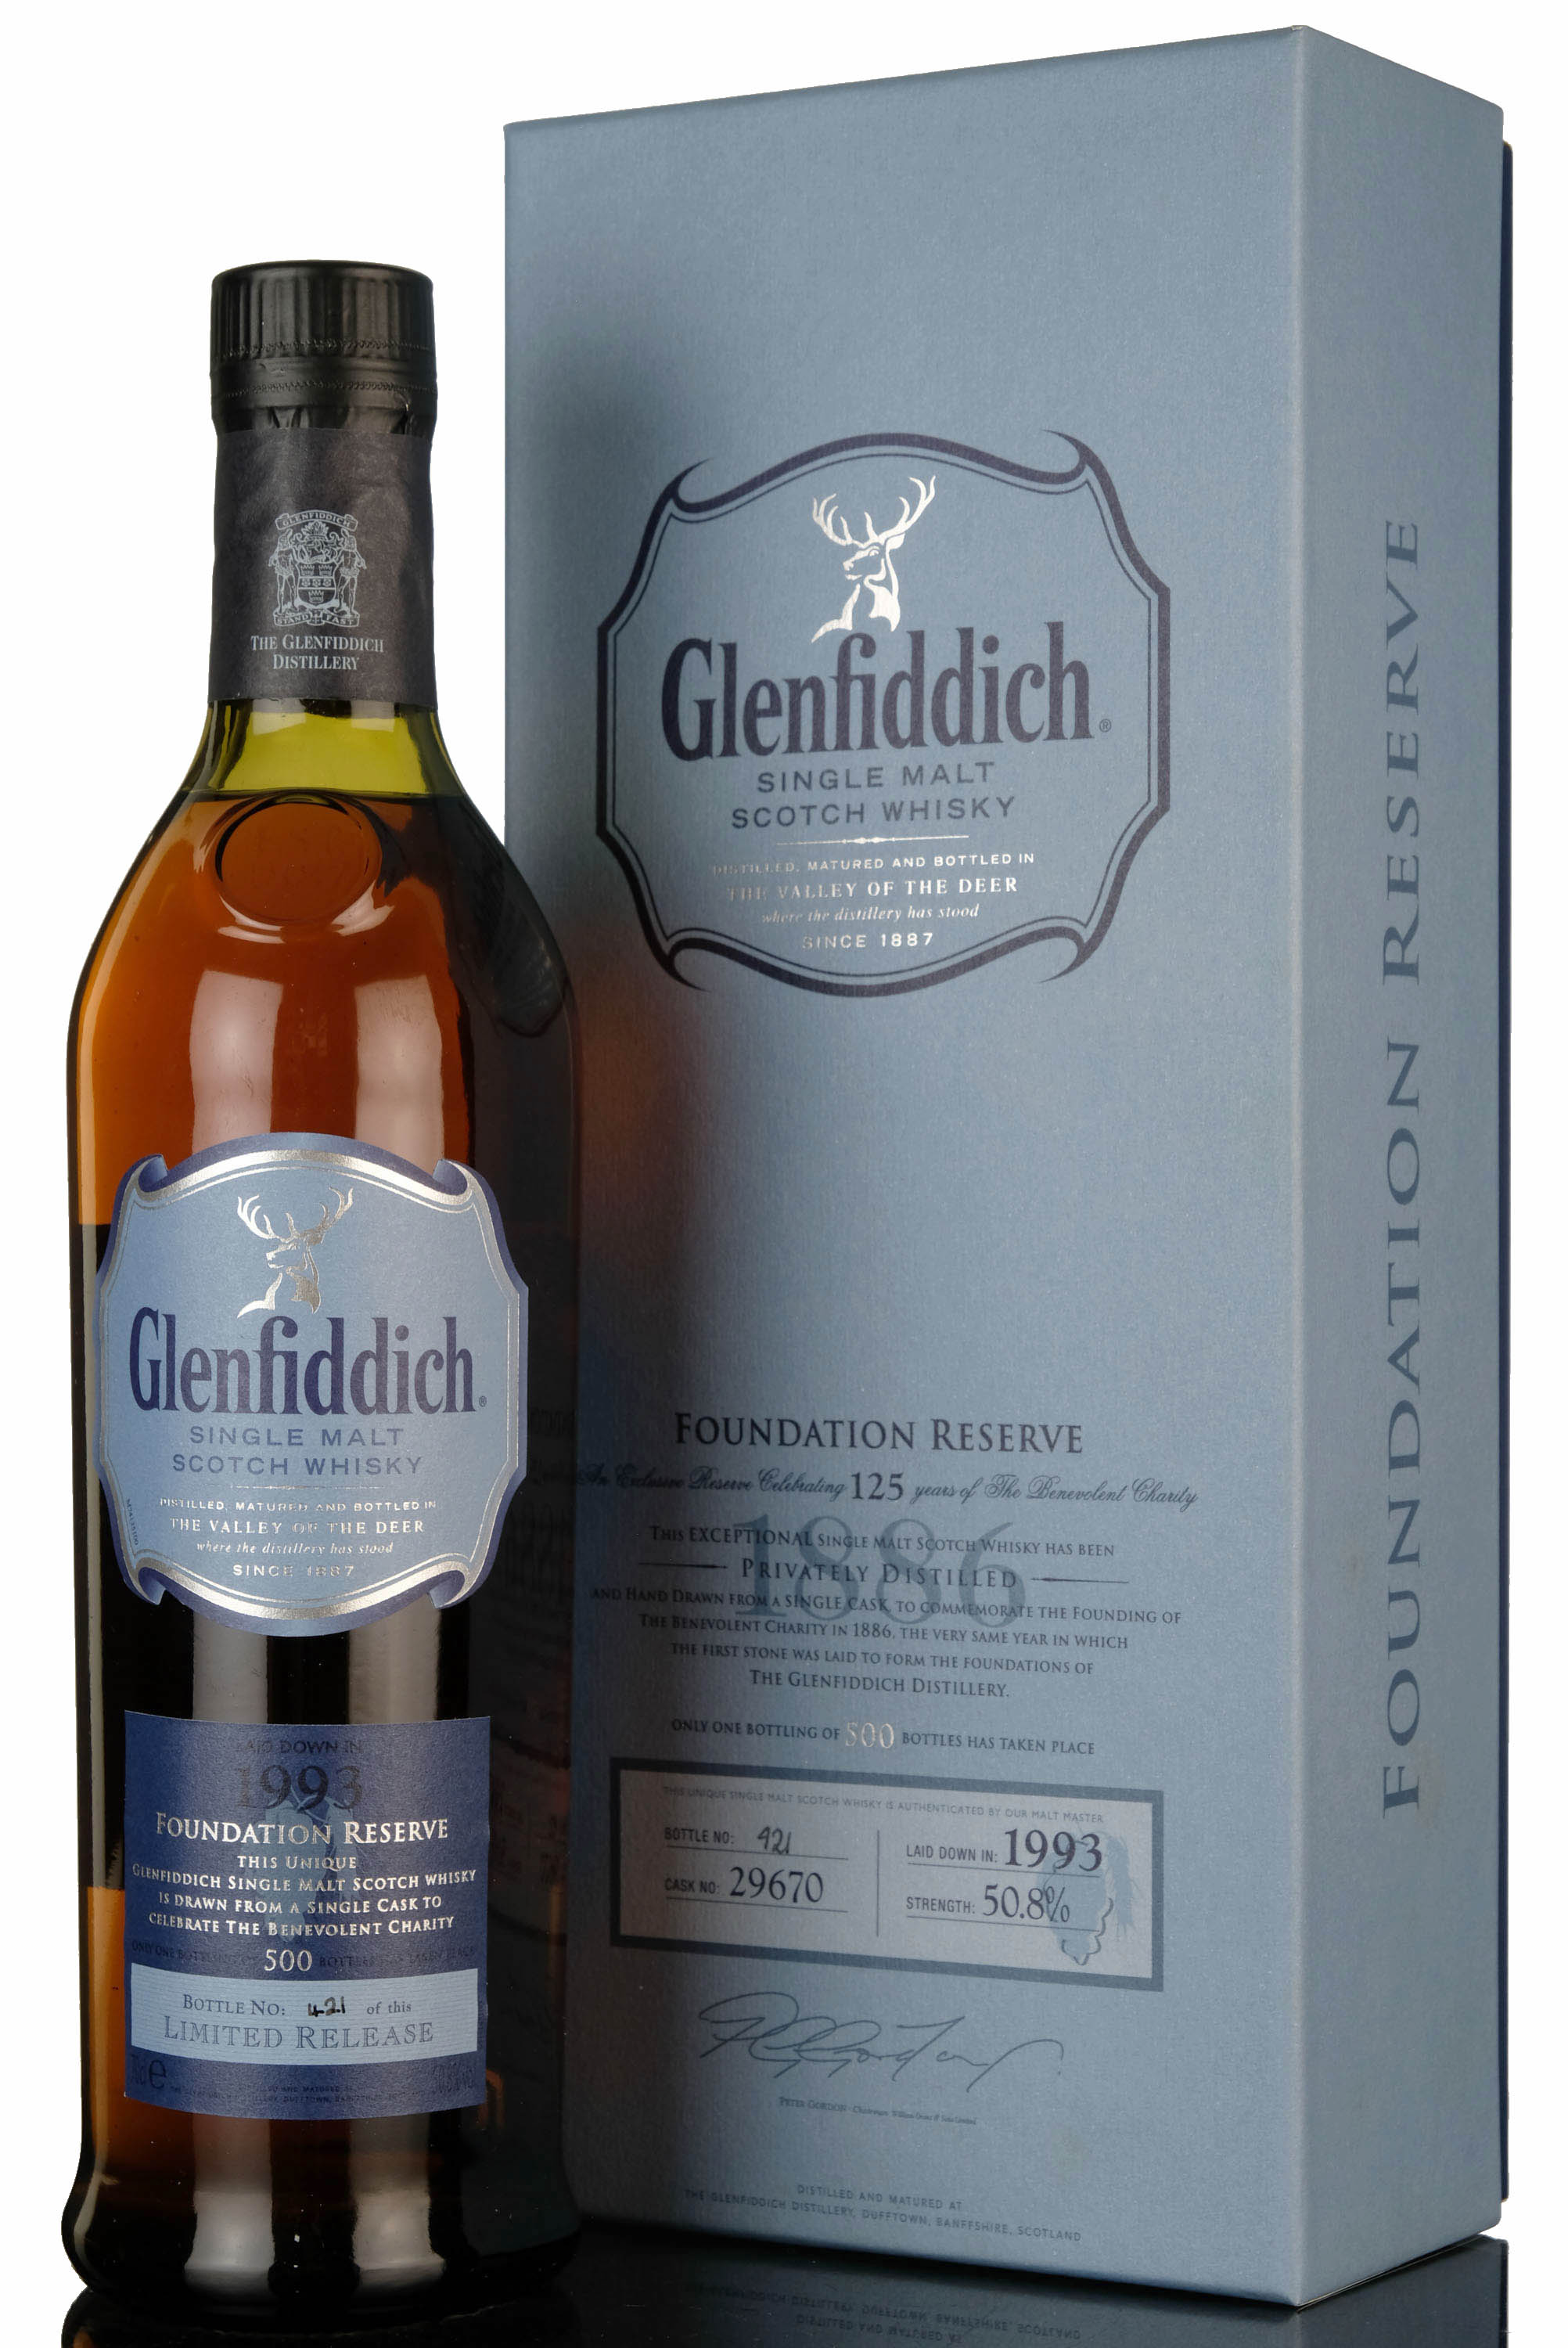 Glenfiddich 1993 - Foundation Reserve